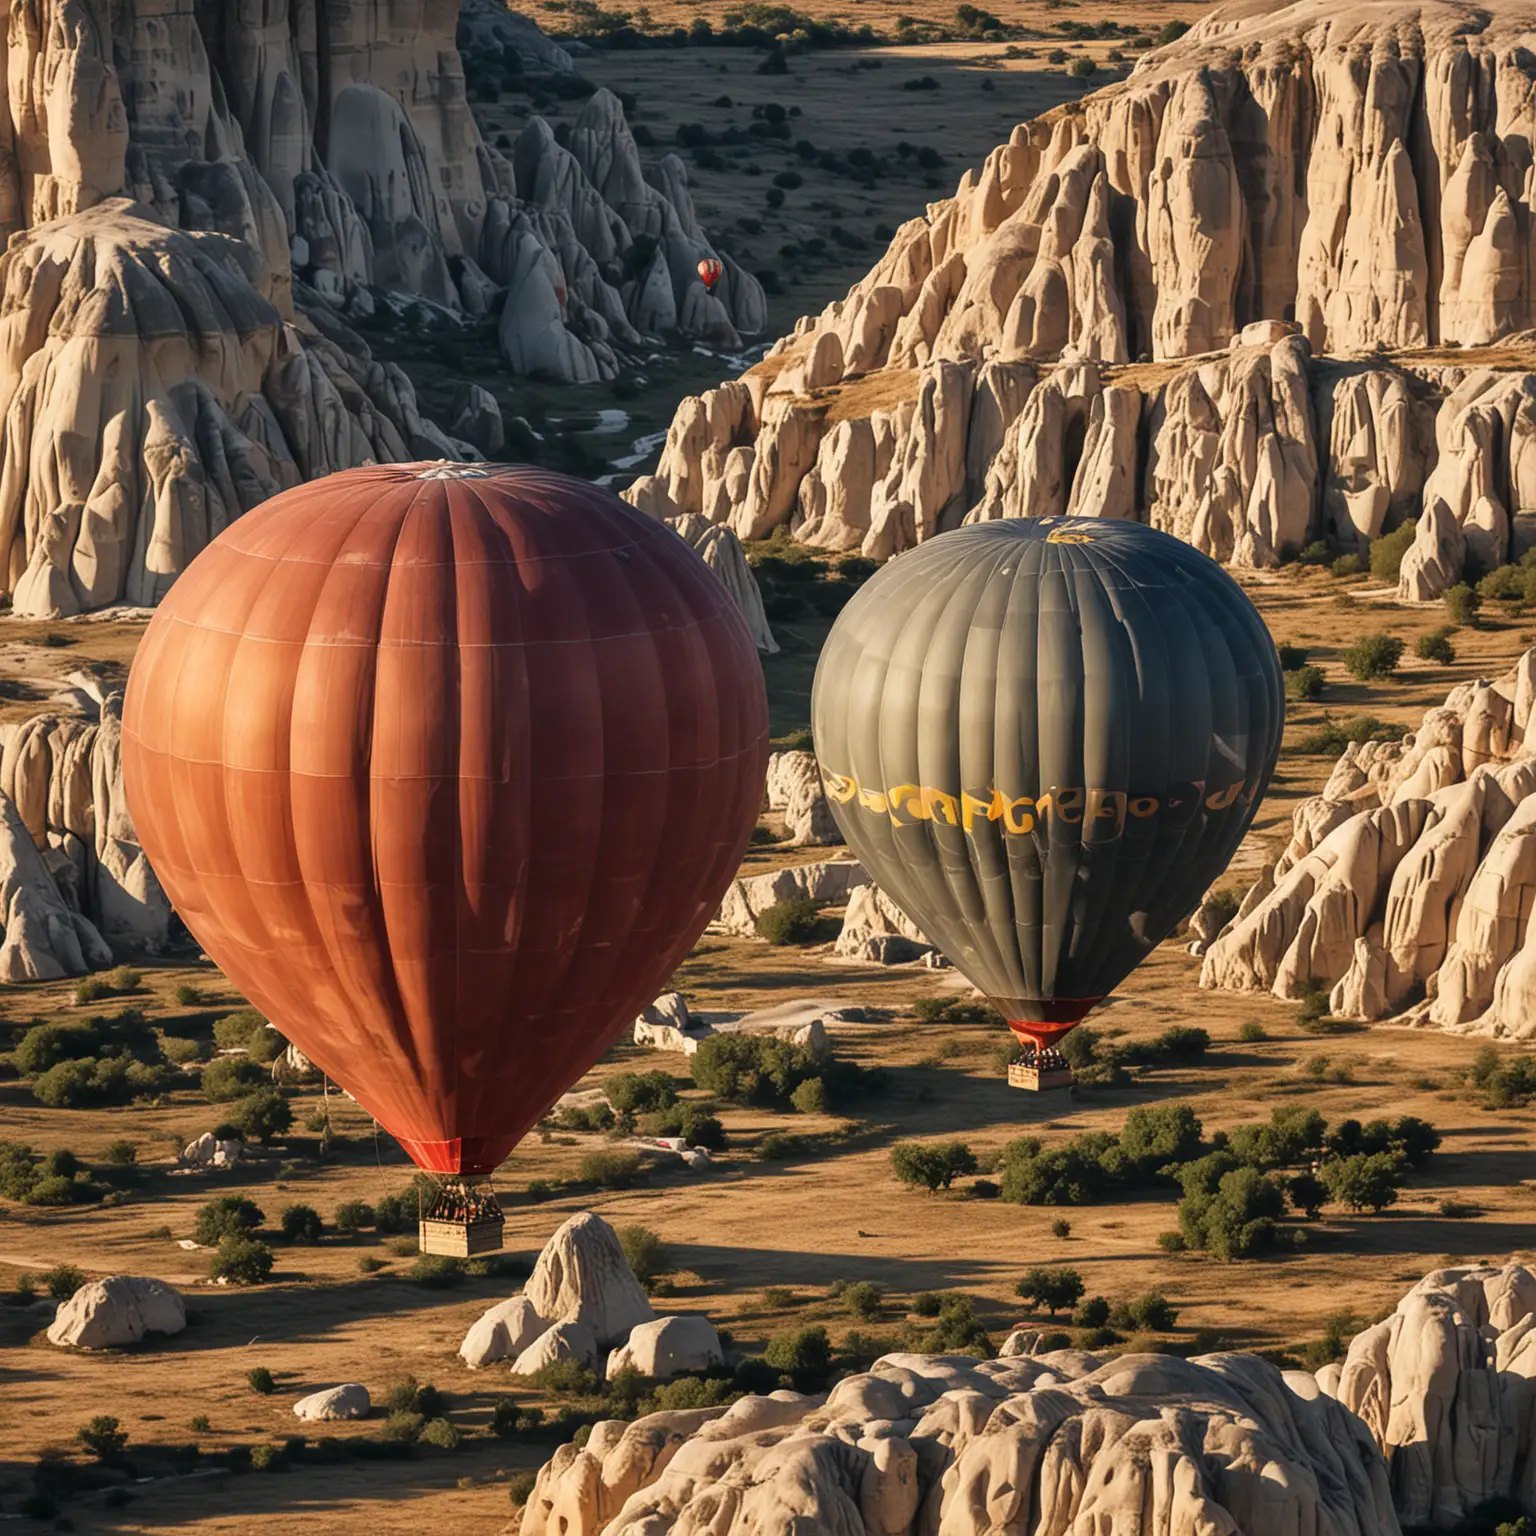 CloseUp View of Colorful Hot Air Balloons in Cappadocia Turkey